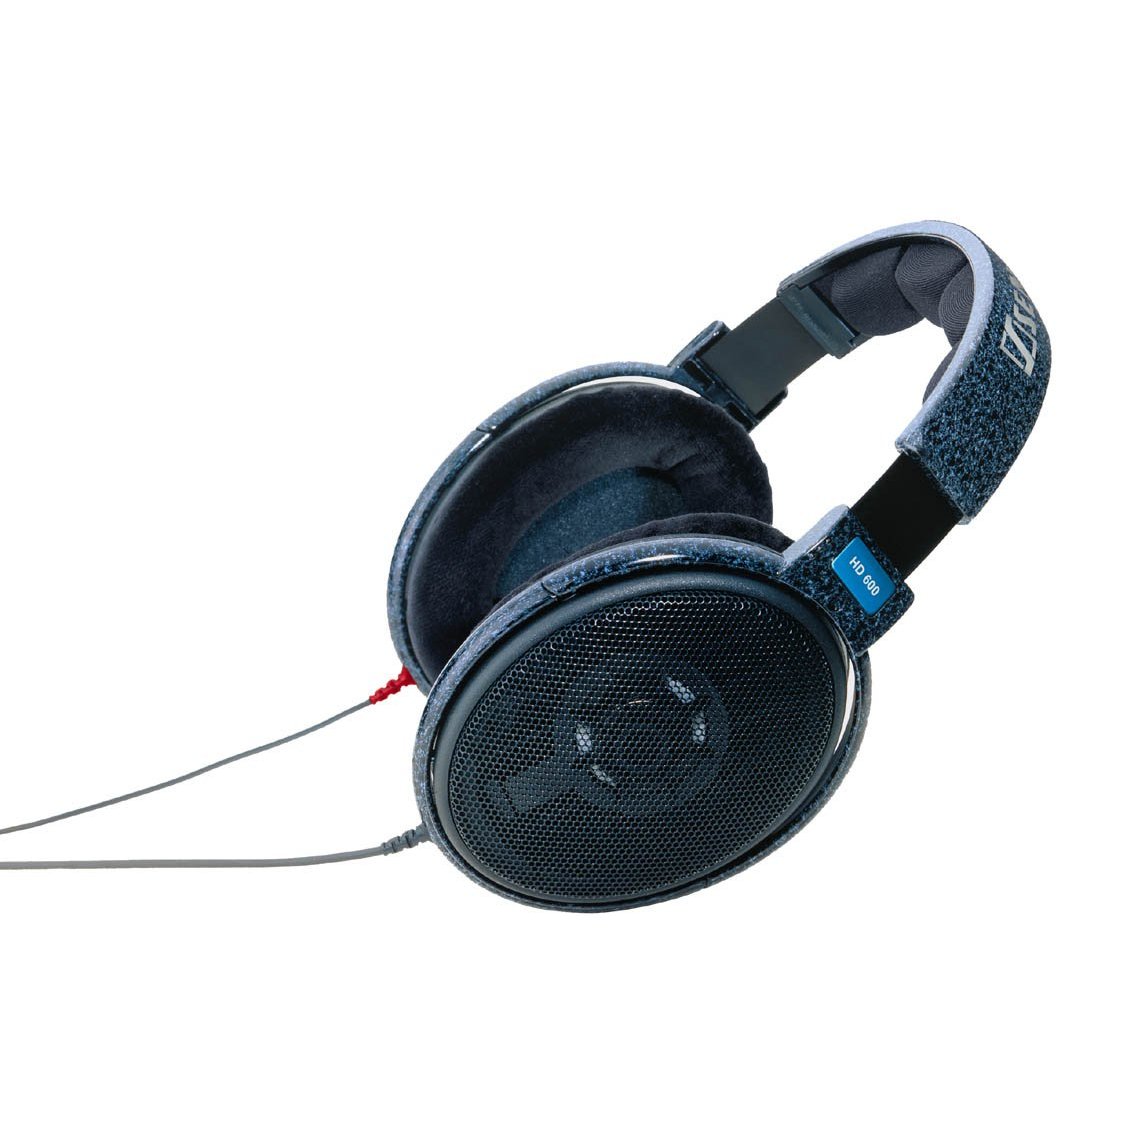 http://thetechjournal.com/wp-content/uploads/images/1109/1316950649-sennheiser-hd-600-open-dynamic-hifi-professional-stereo-headphones-2.jpg